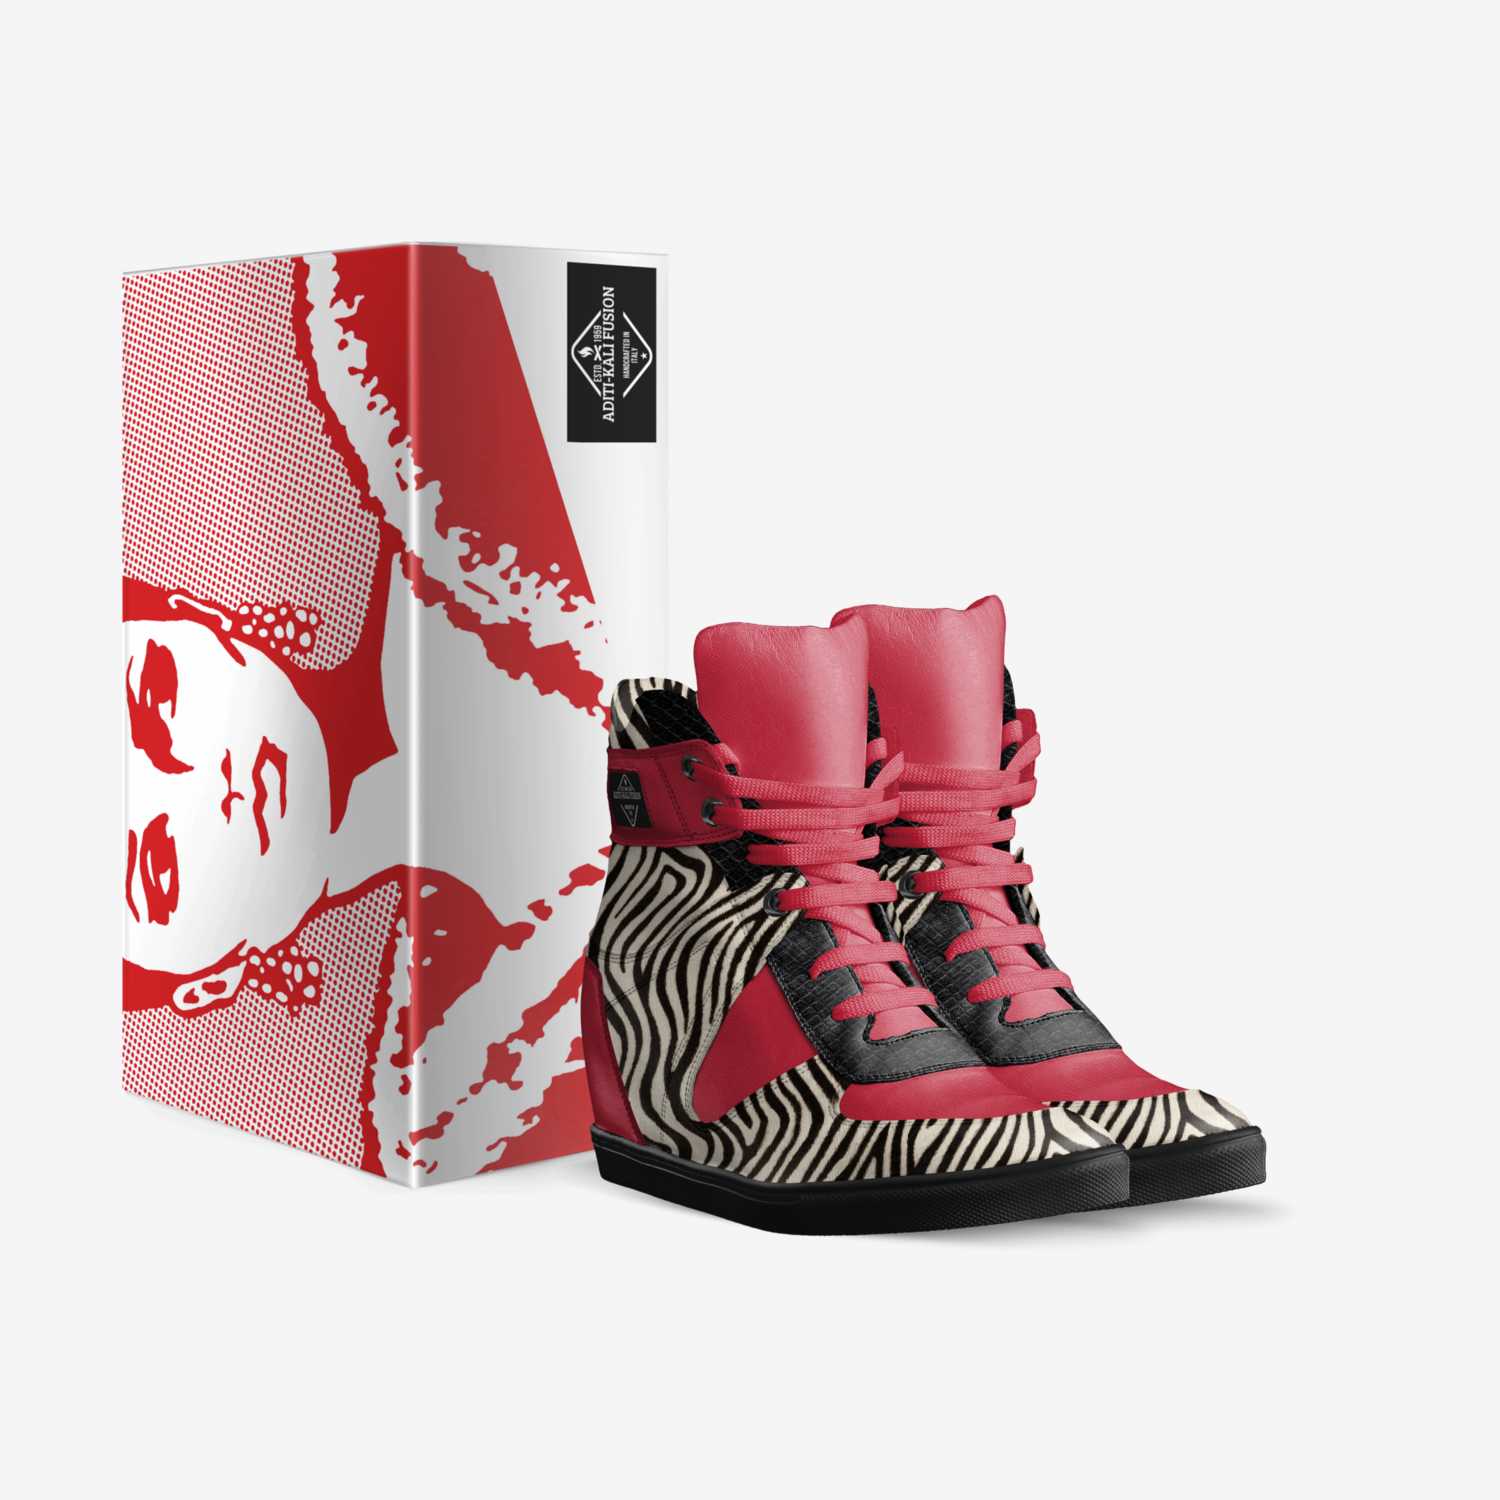 aditi-kali fusion custom made in Italy shoes by Aditi-kali Of Wonkey Donkey Bazaar | Box view